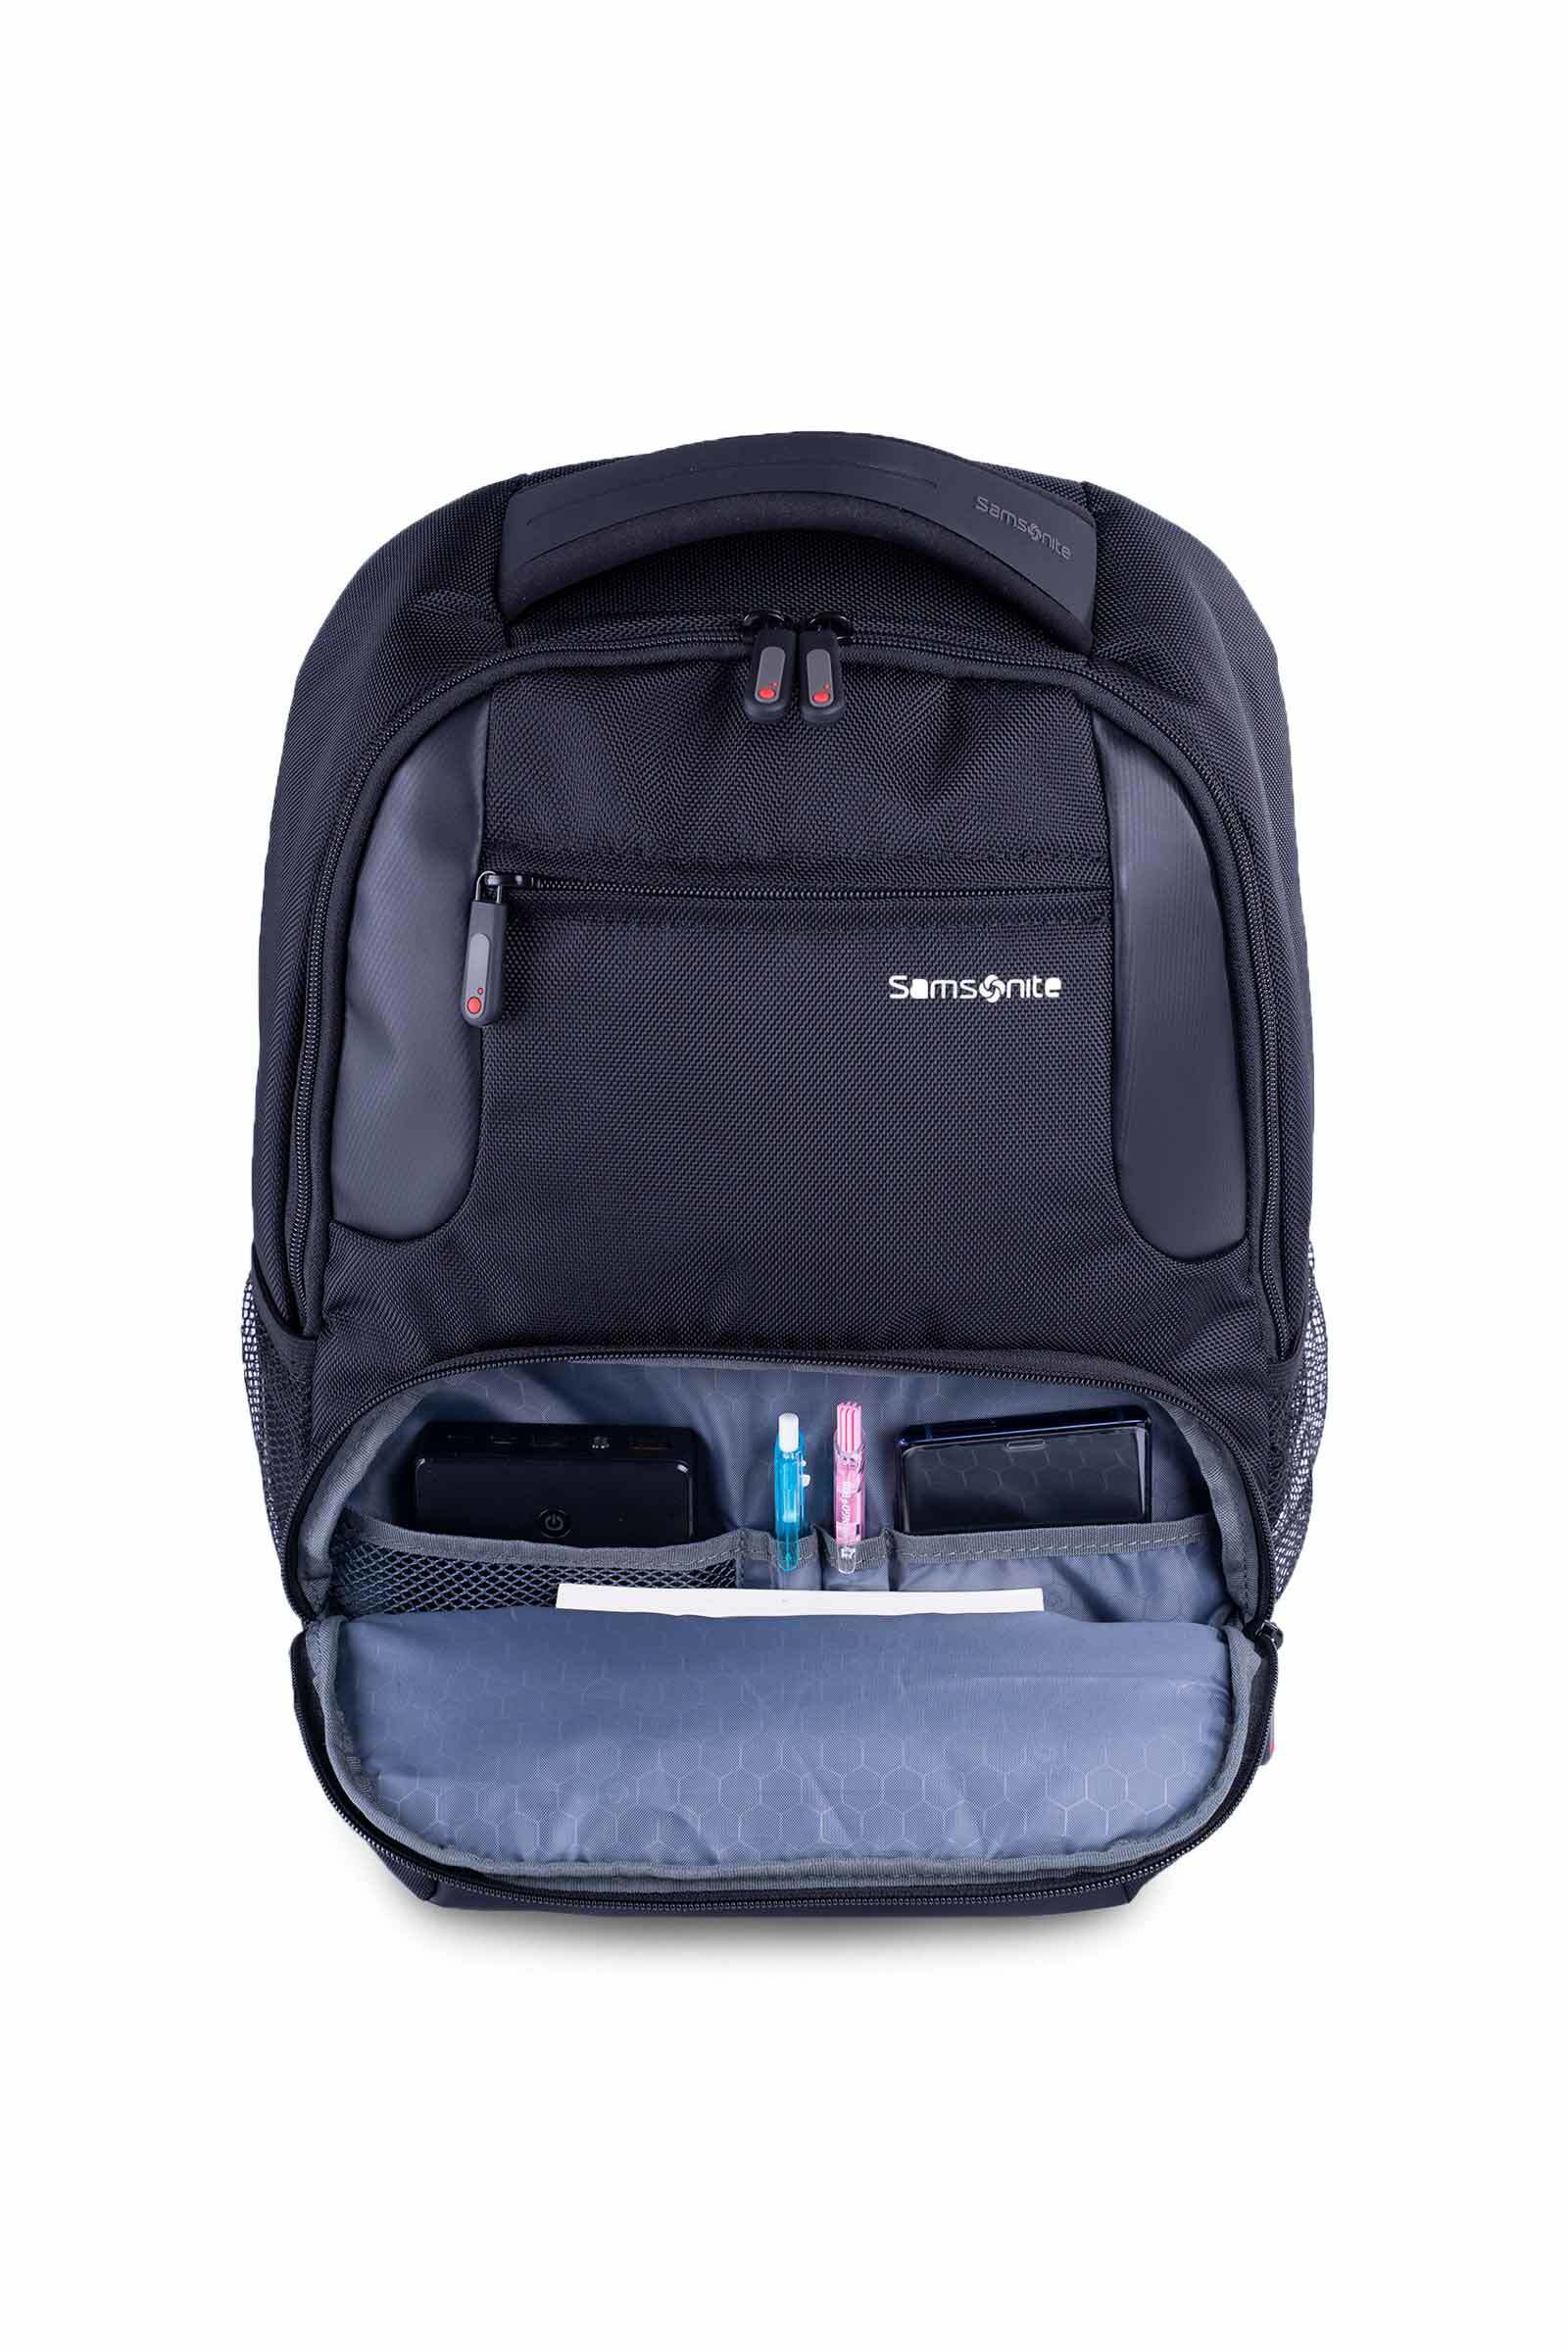 Samsonite ENPRIAL - E Classic Backpack